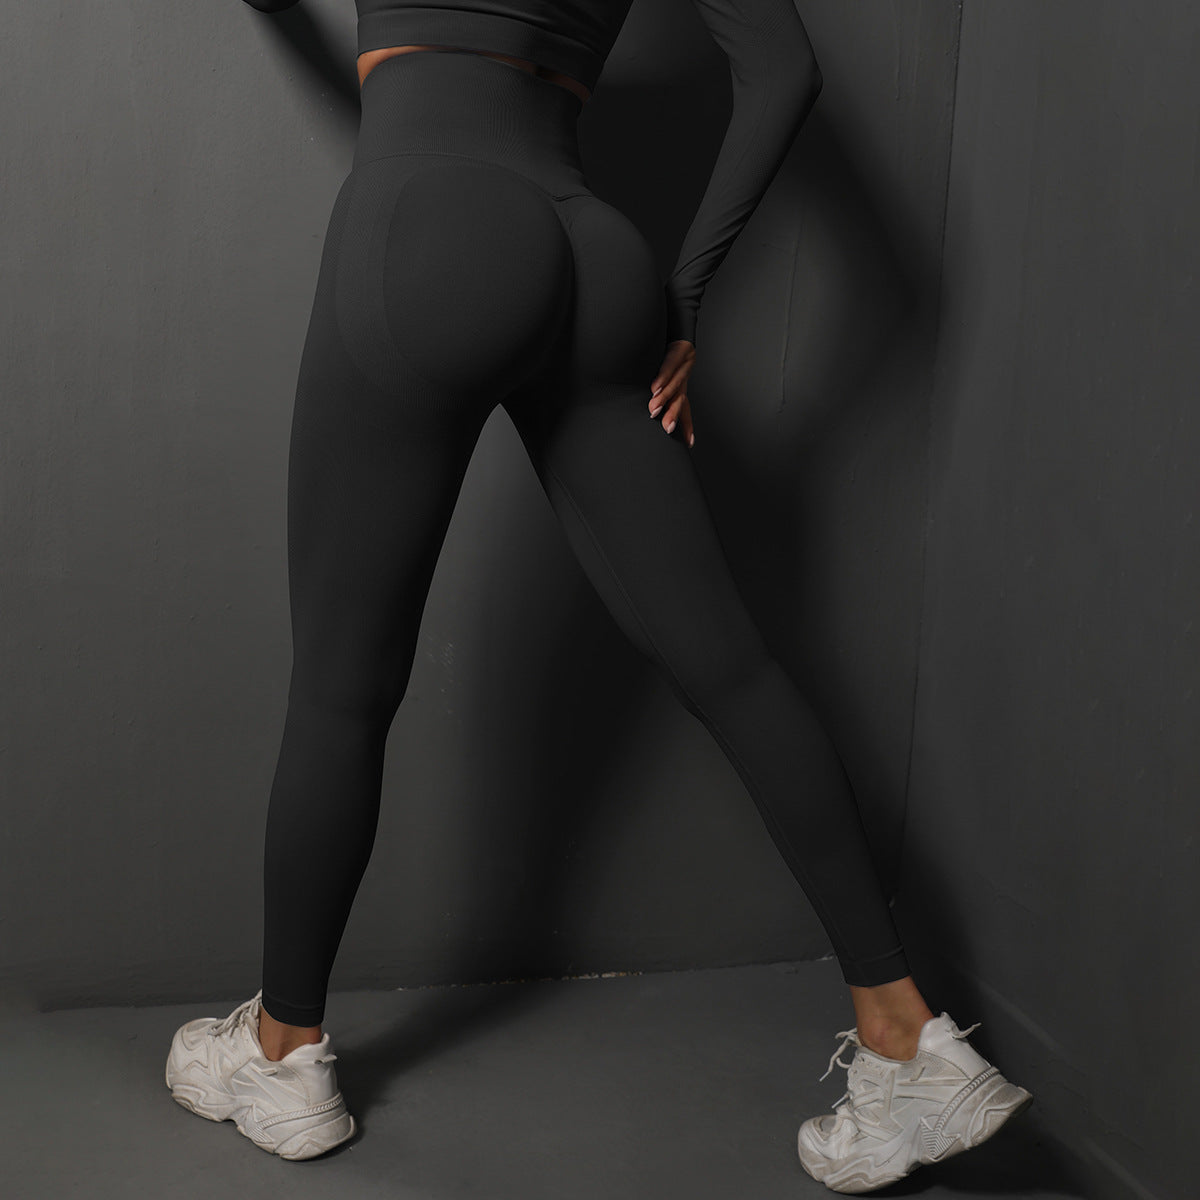 Sexy High Waist Yoga Sports Leggings-Activewear-Black-S-Free Shipping Leatheretro